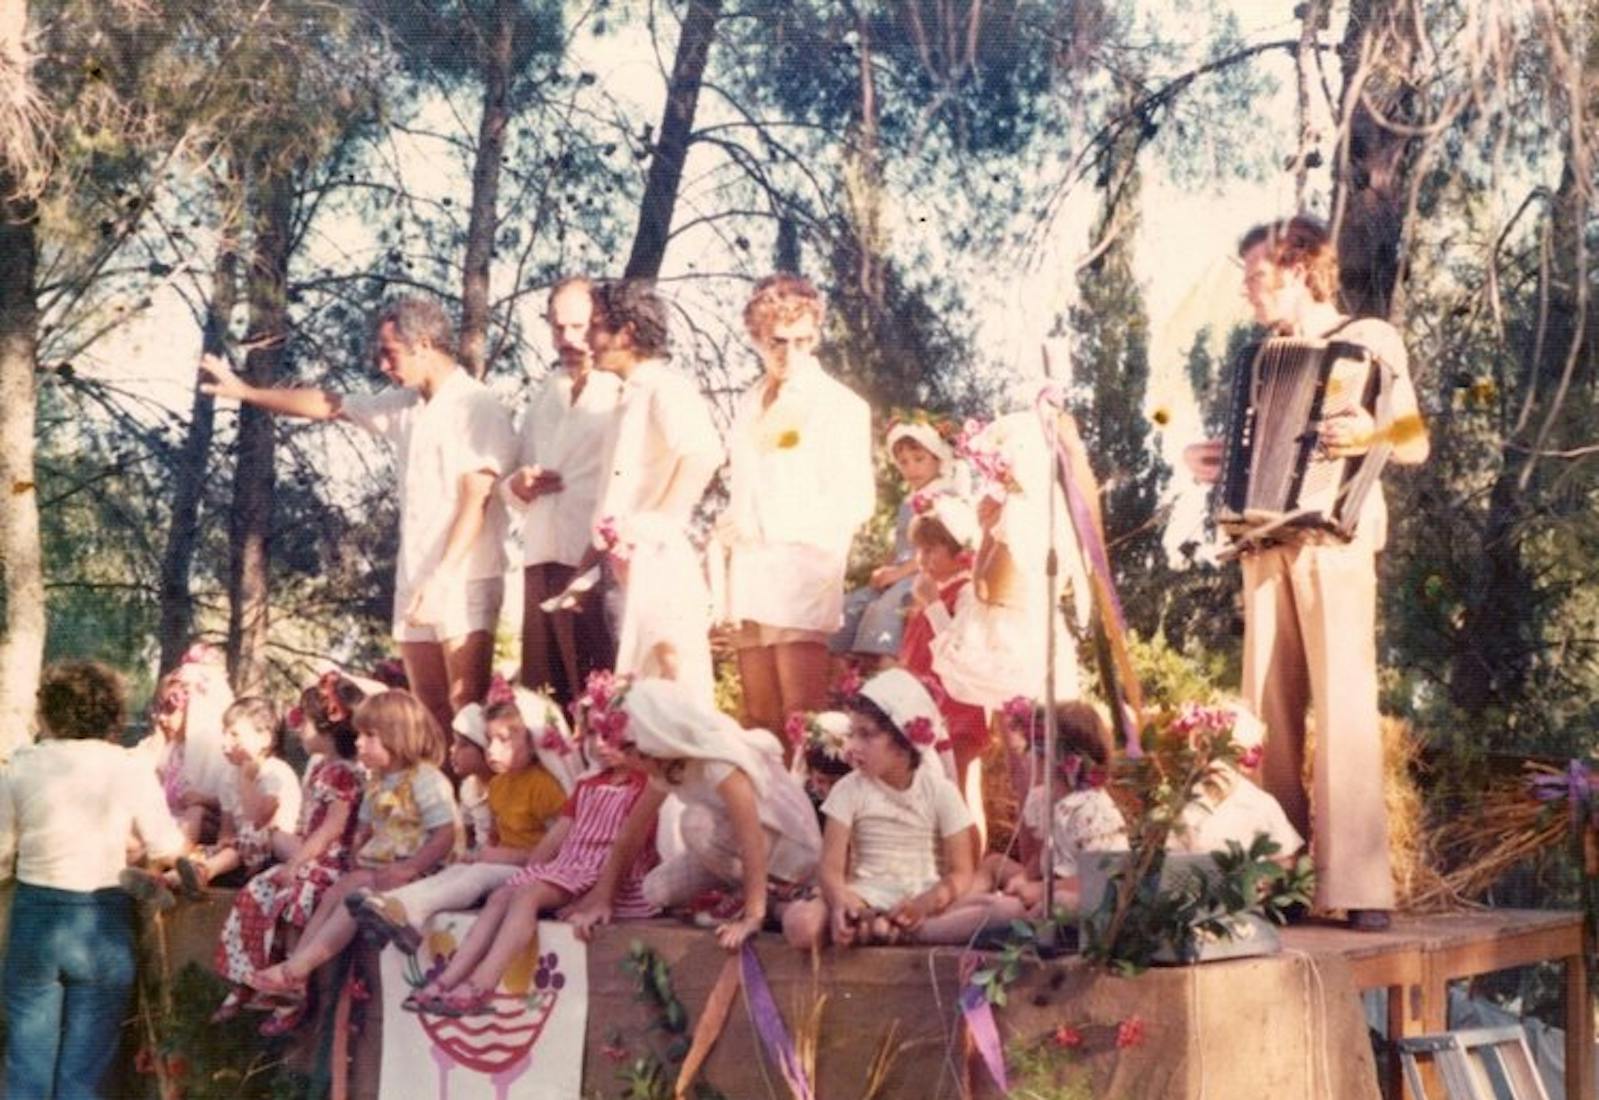 Members of Kibbutz Ma'ale HaHamisha celebrating Shavuot.